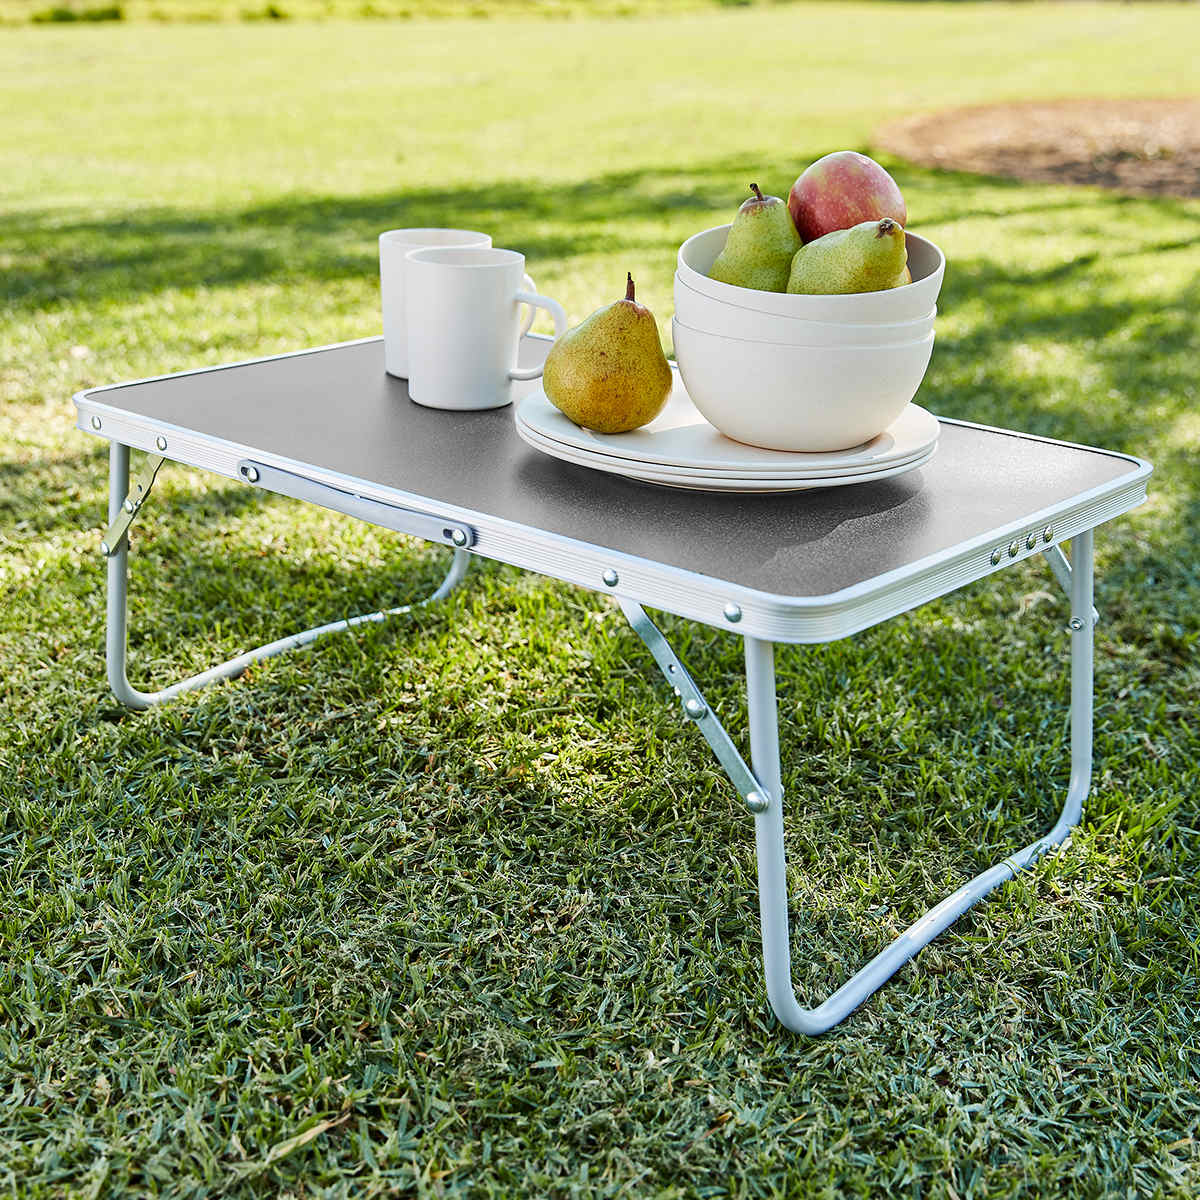 Kmart picnic table